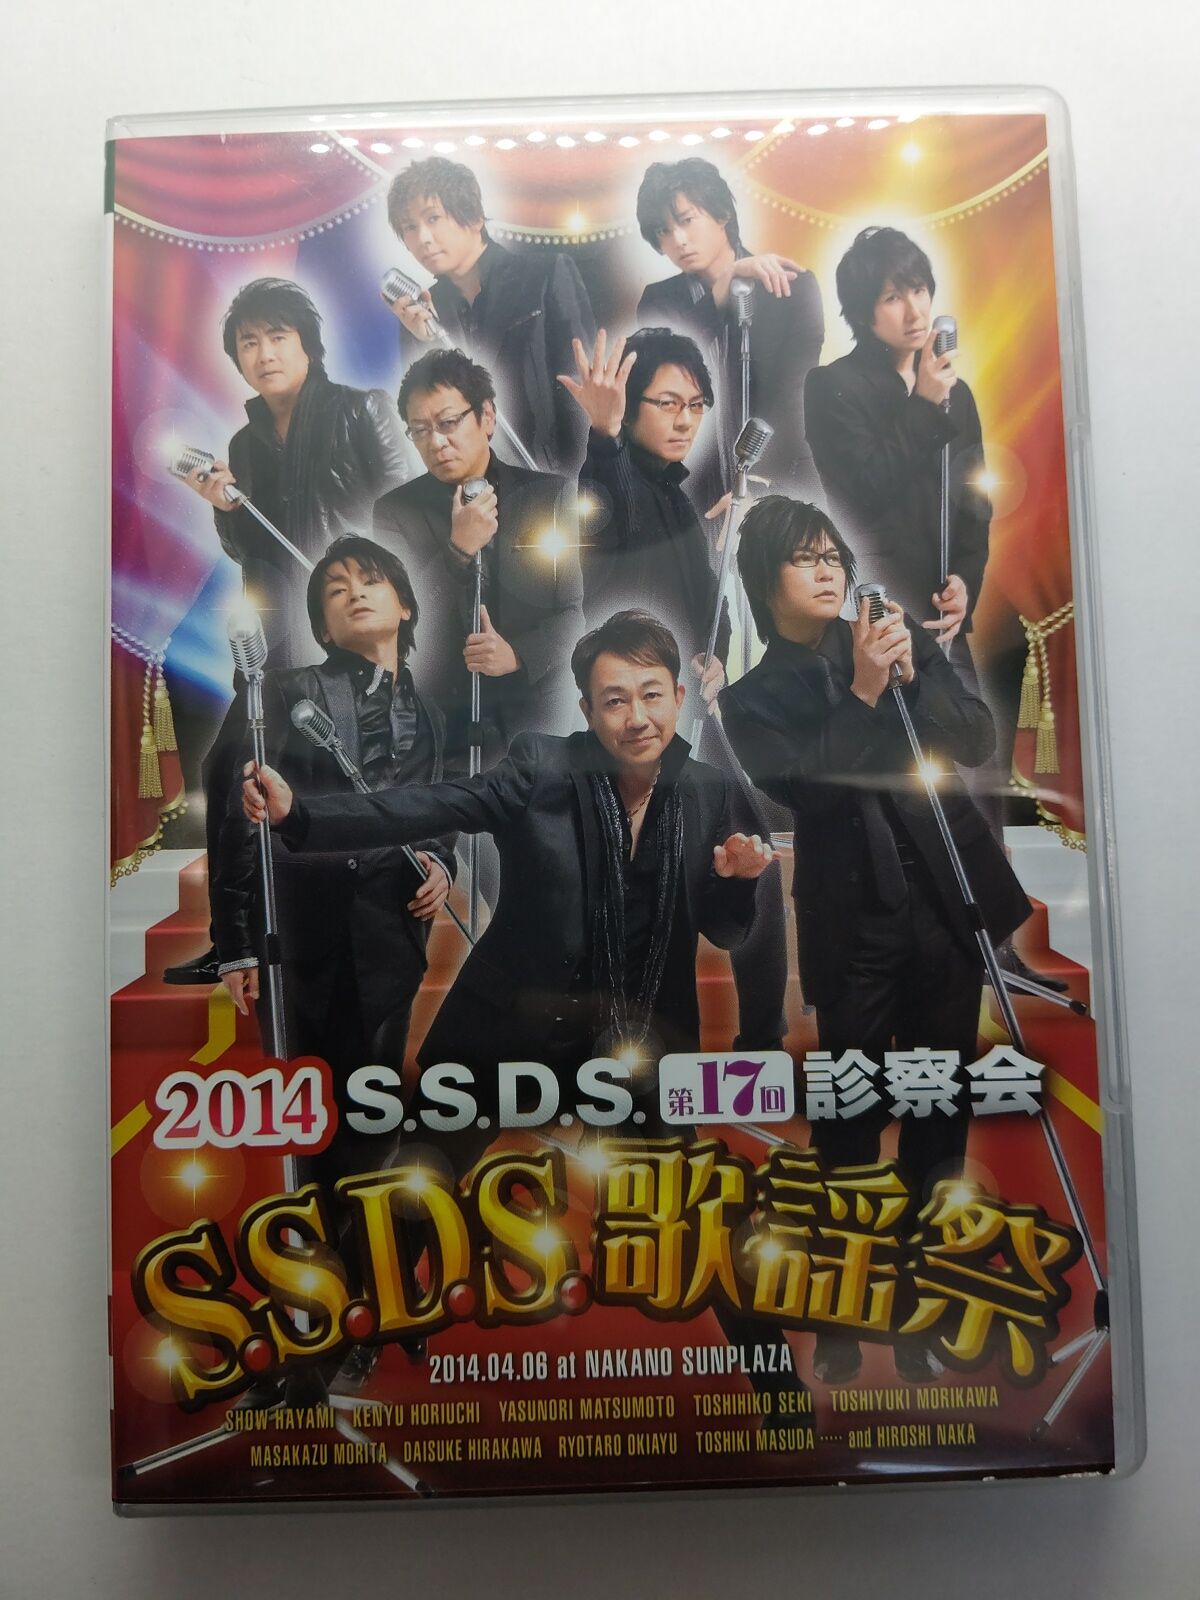 S.S.D.S. 2014 S.S.D.S.歌謡祭 DVD